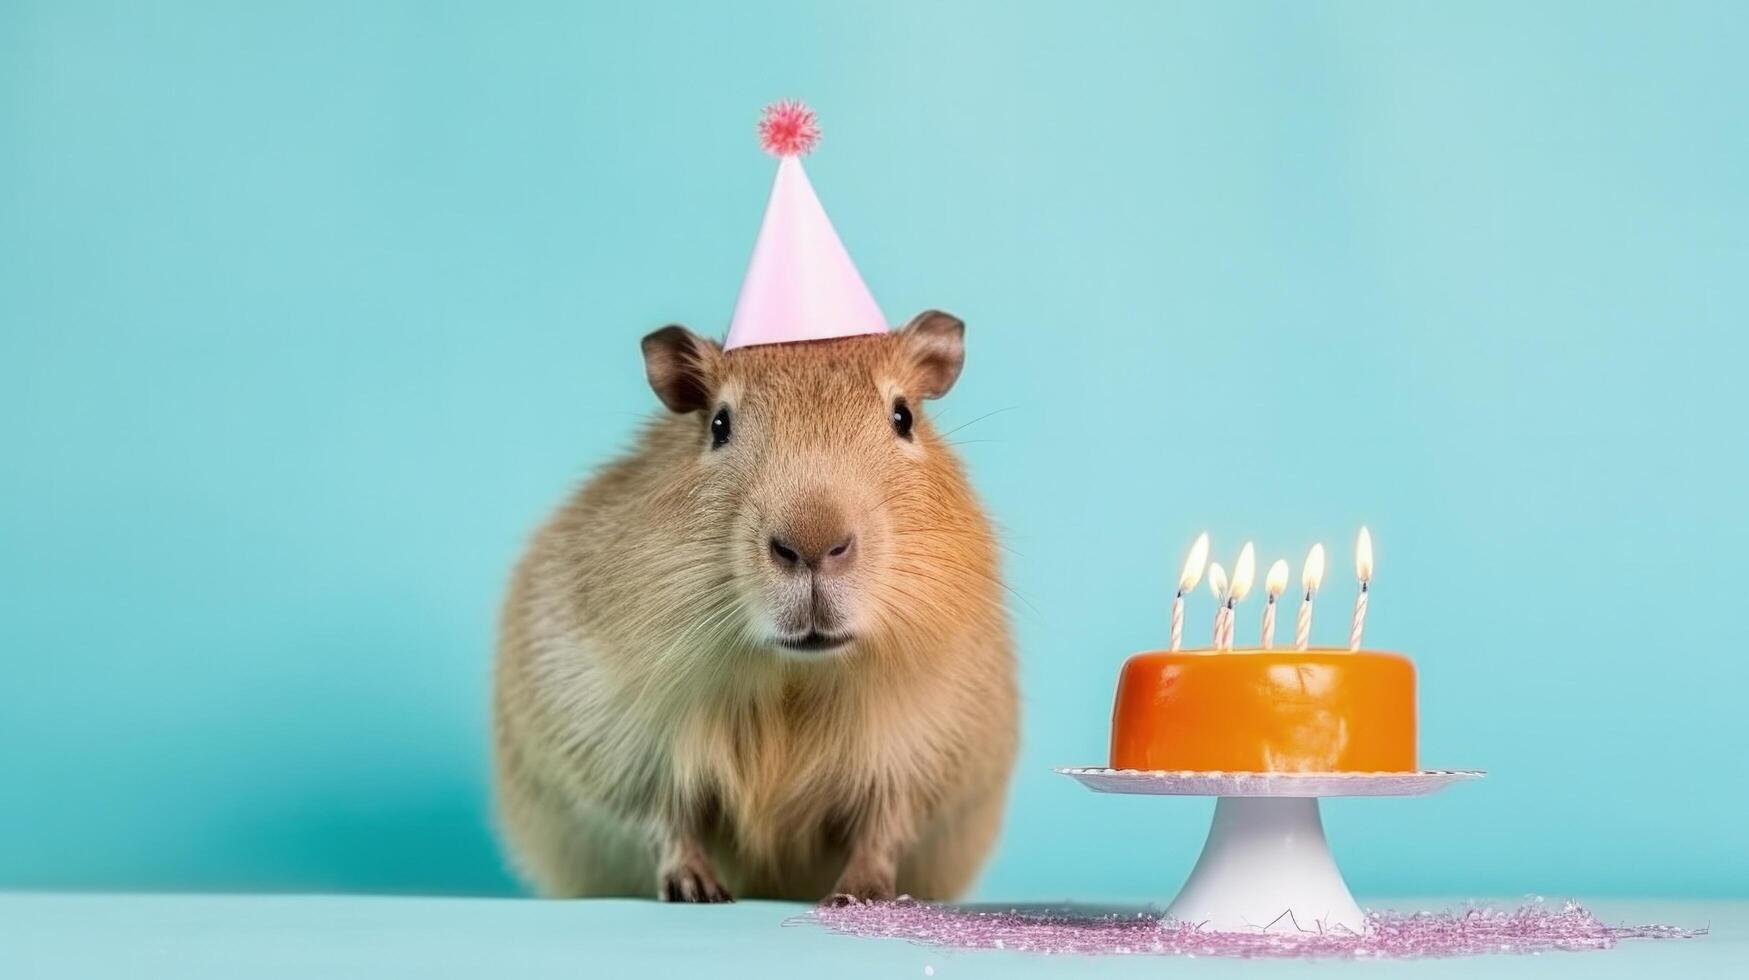 Cute fluffy capybara in birthday cap with birthday cake Illustration photo